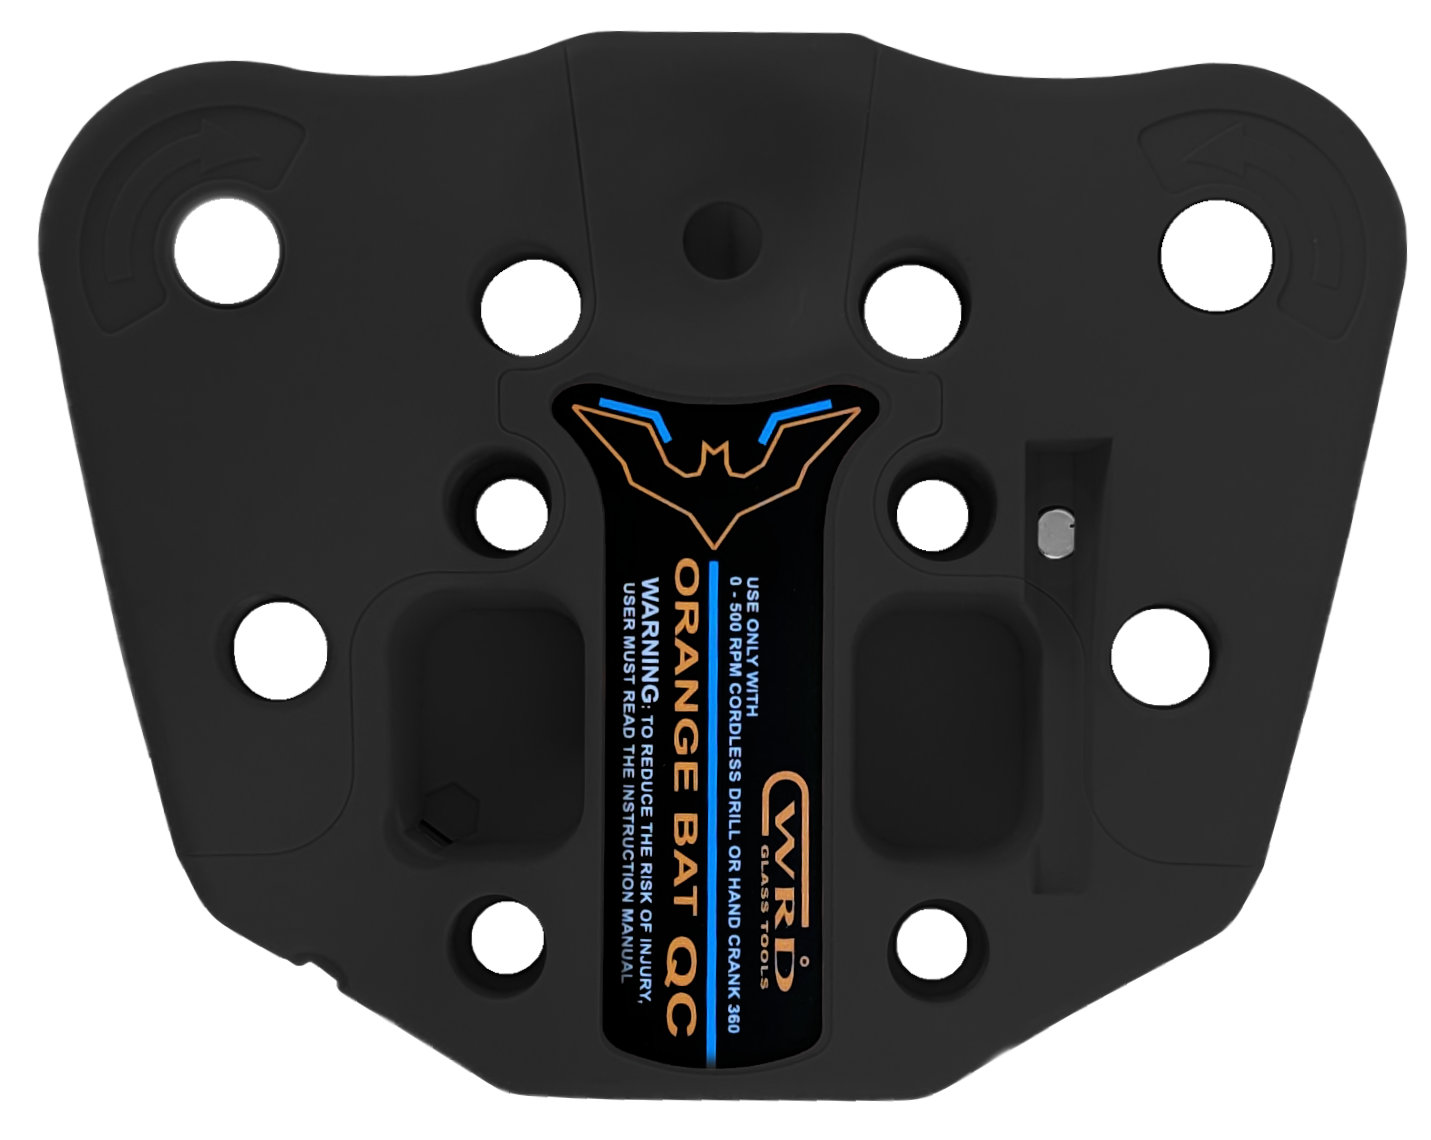 Orange Bat QC Body Components - Black Edition